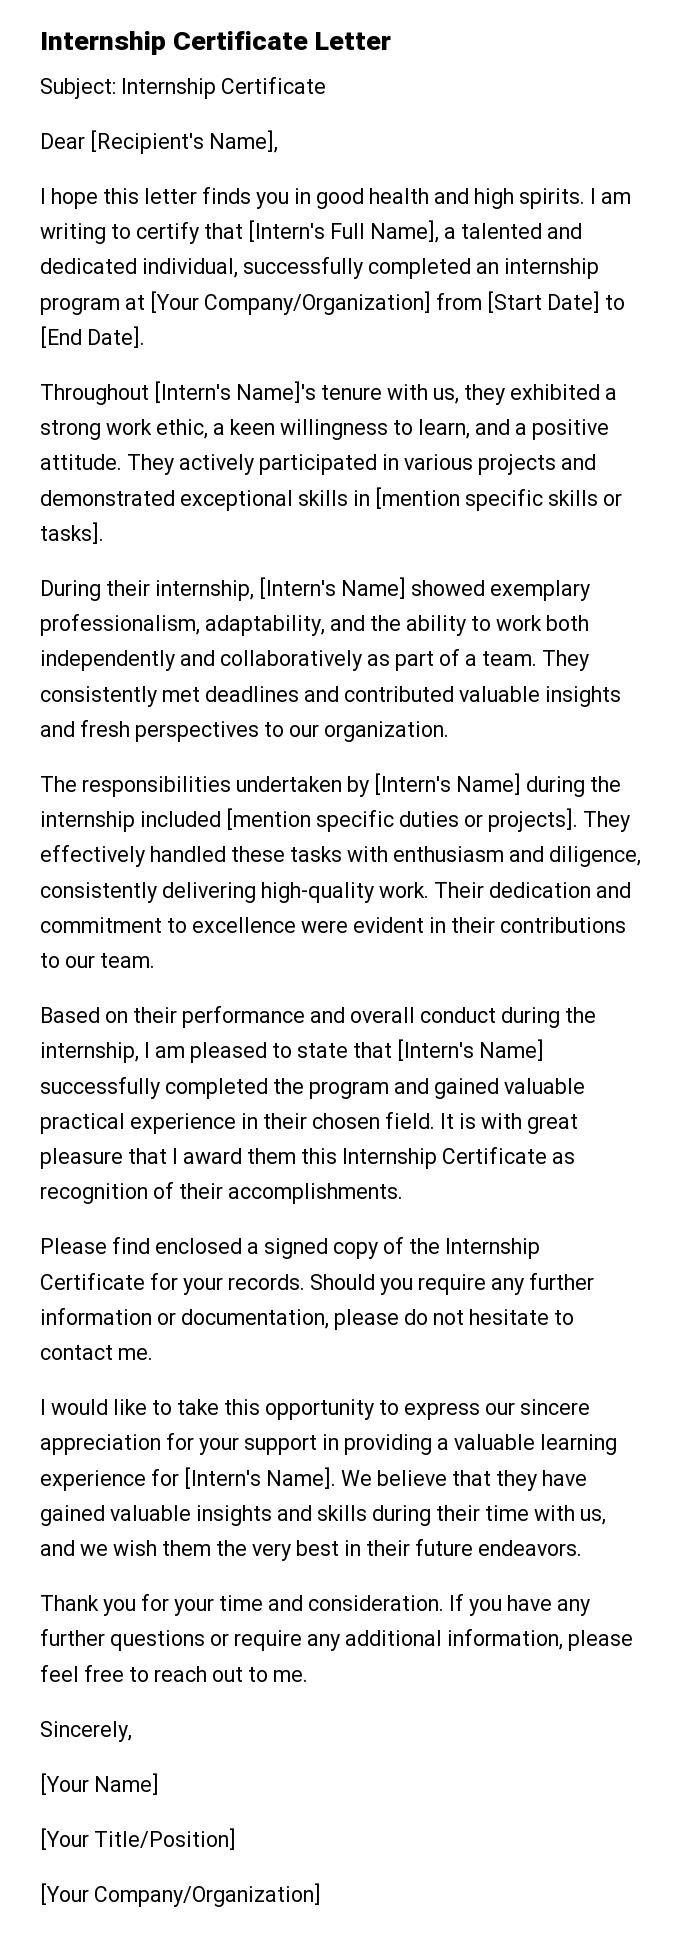 Internship Certificate Letter